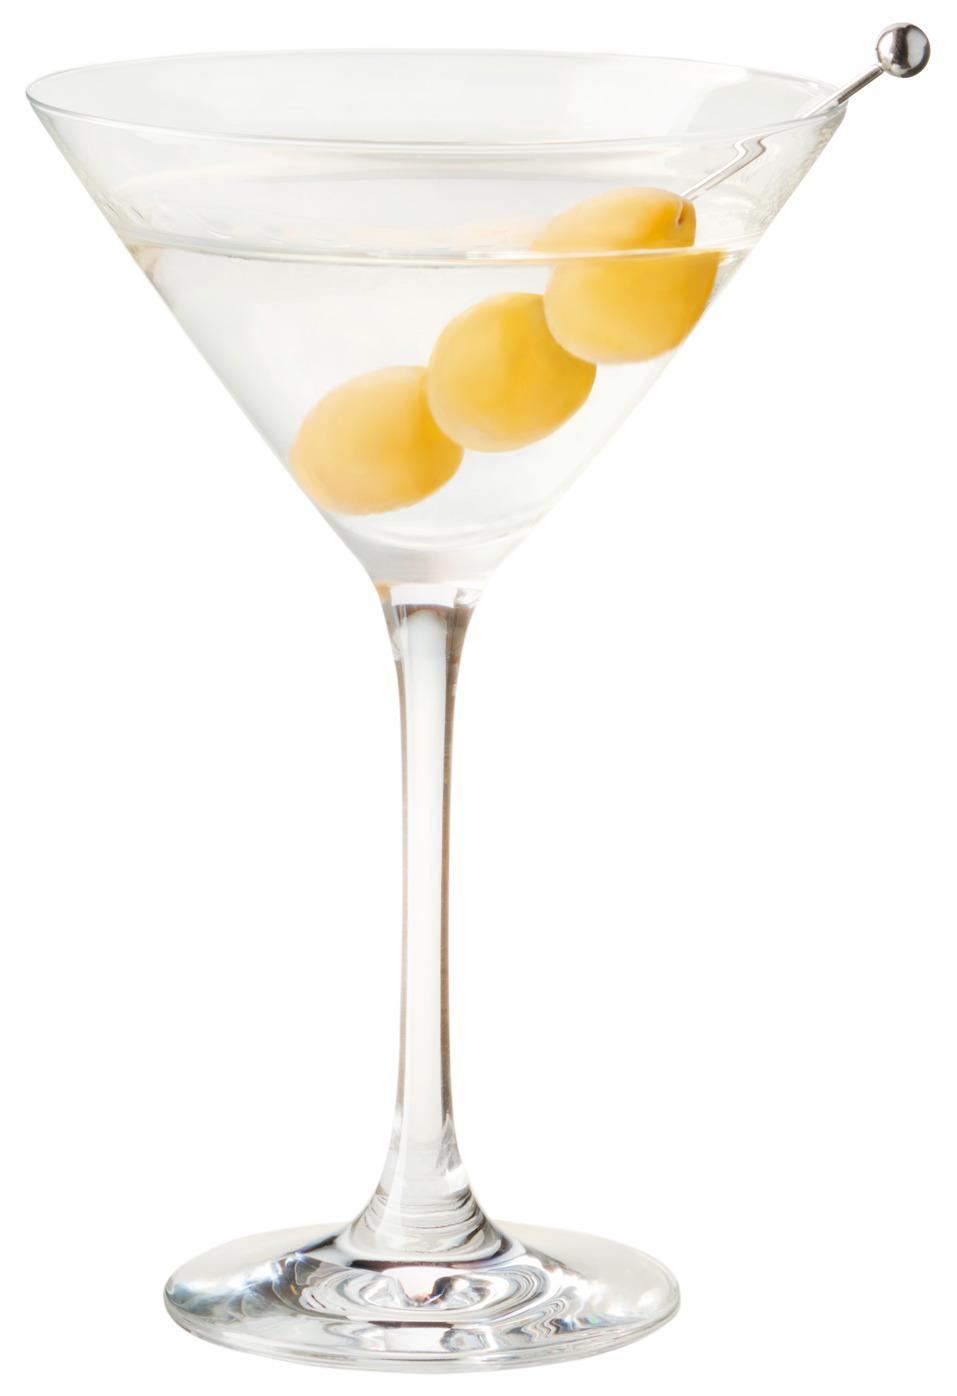 How to Make the Vodka Martini